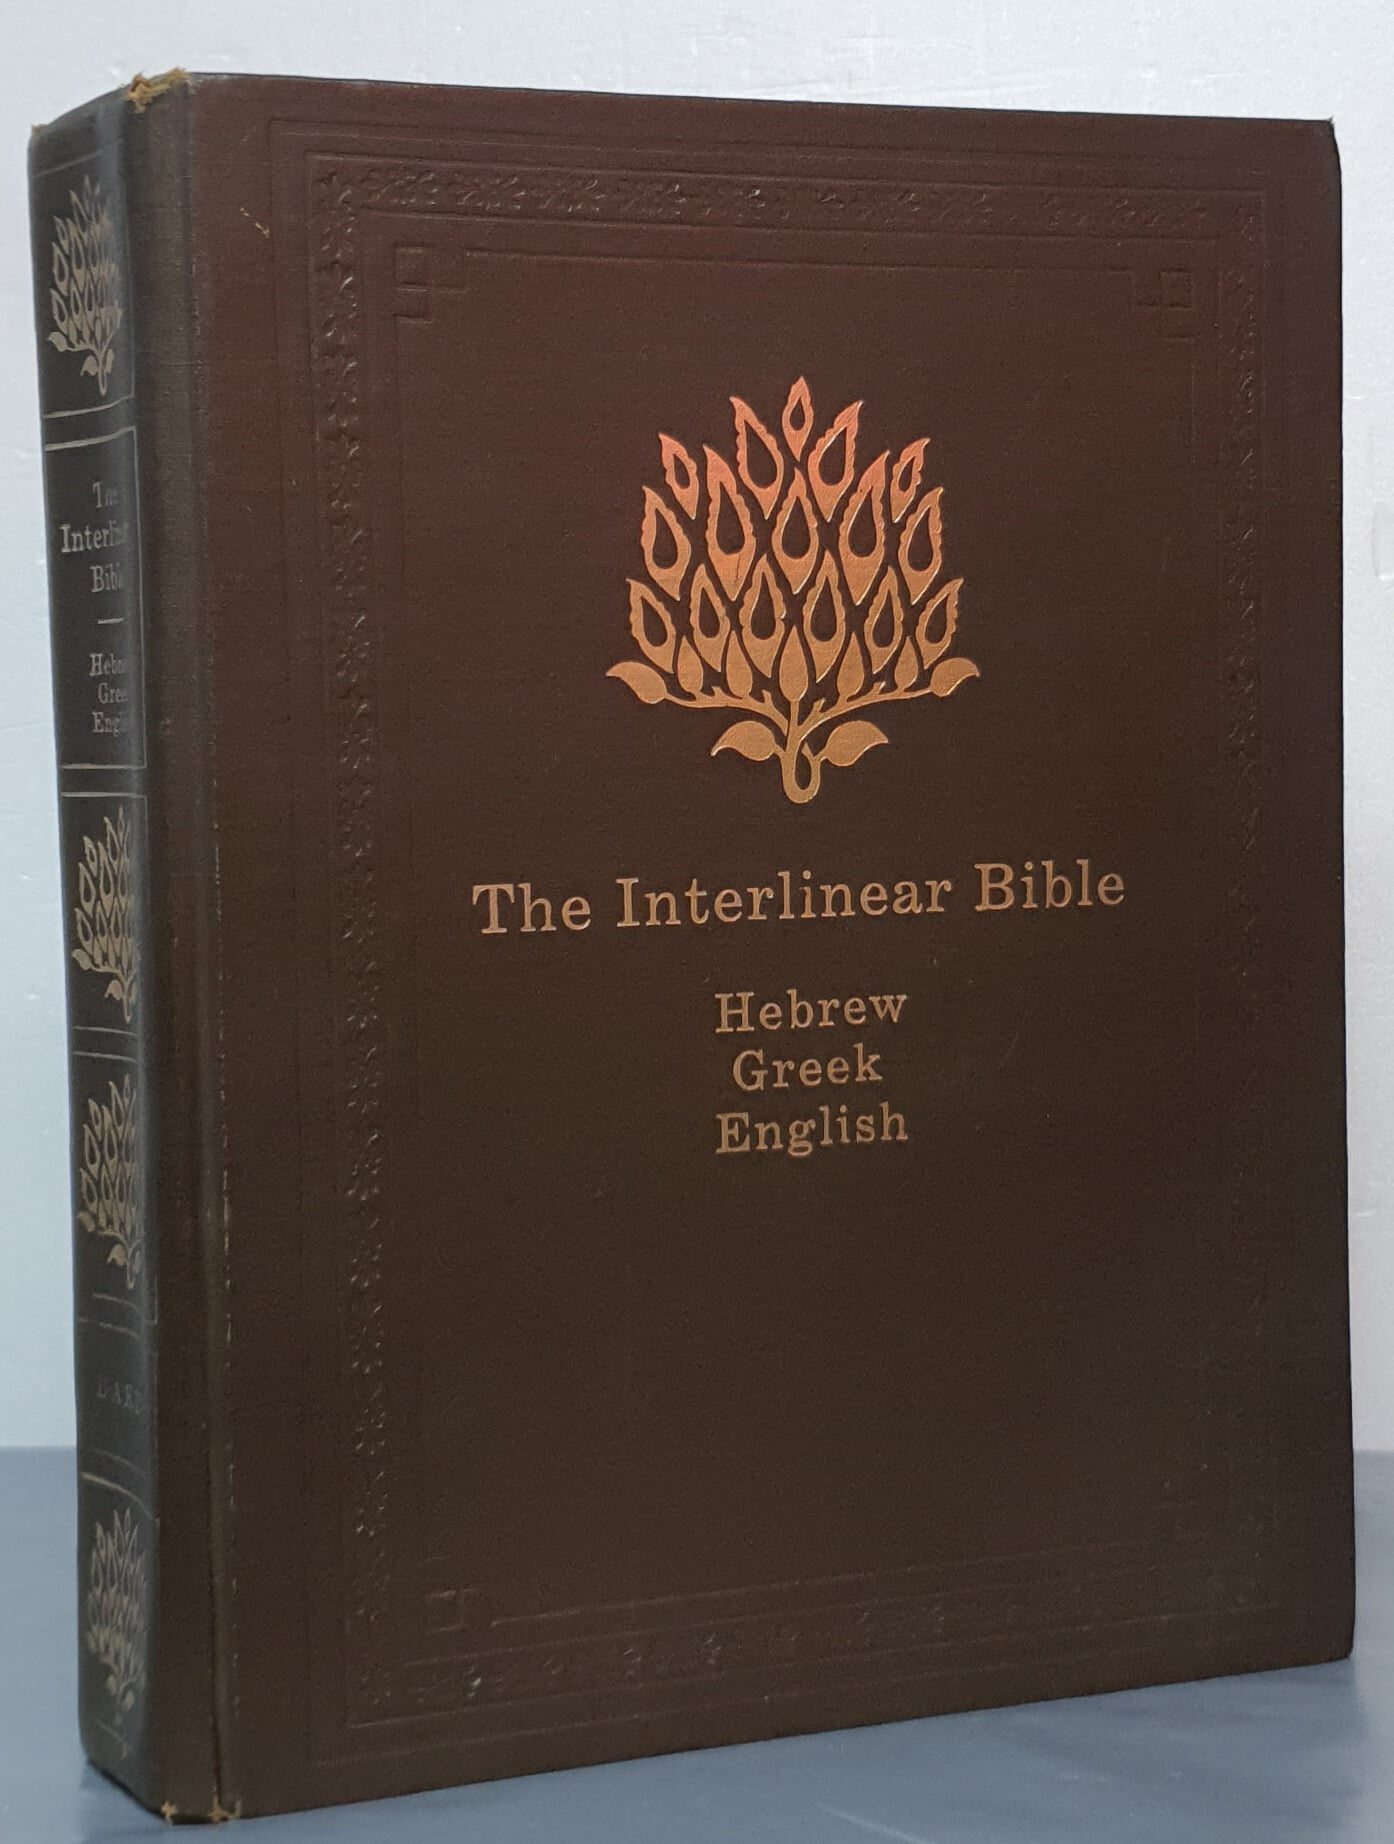 The Interlinear Bible - Hebrew, Greek, English 